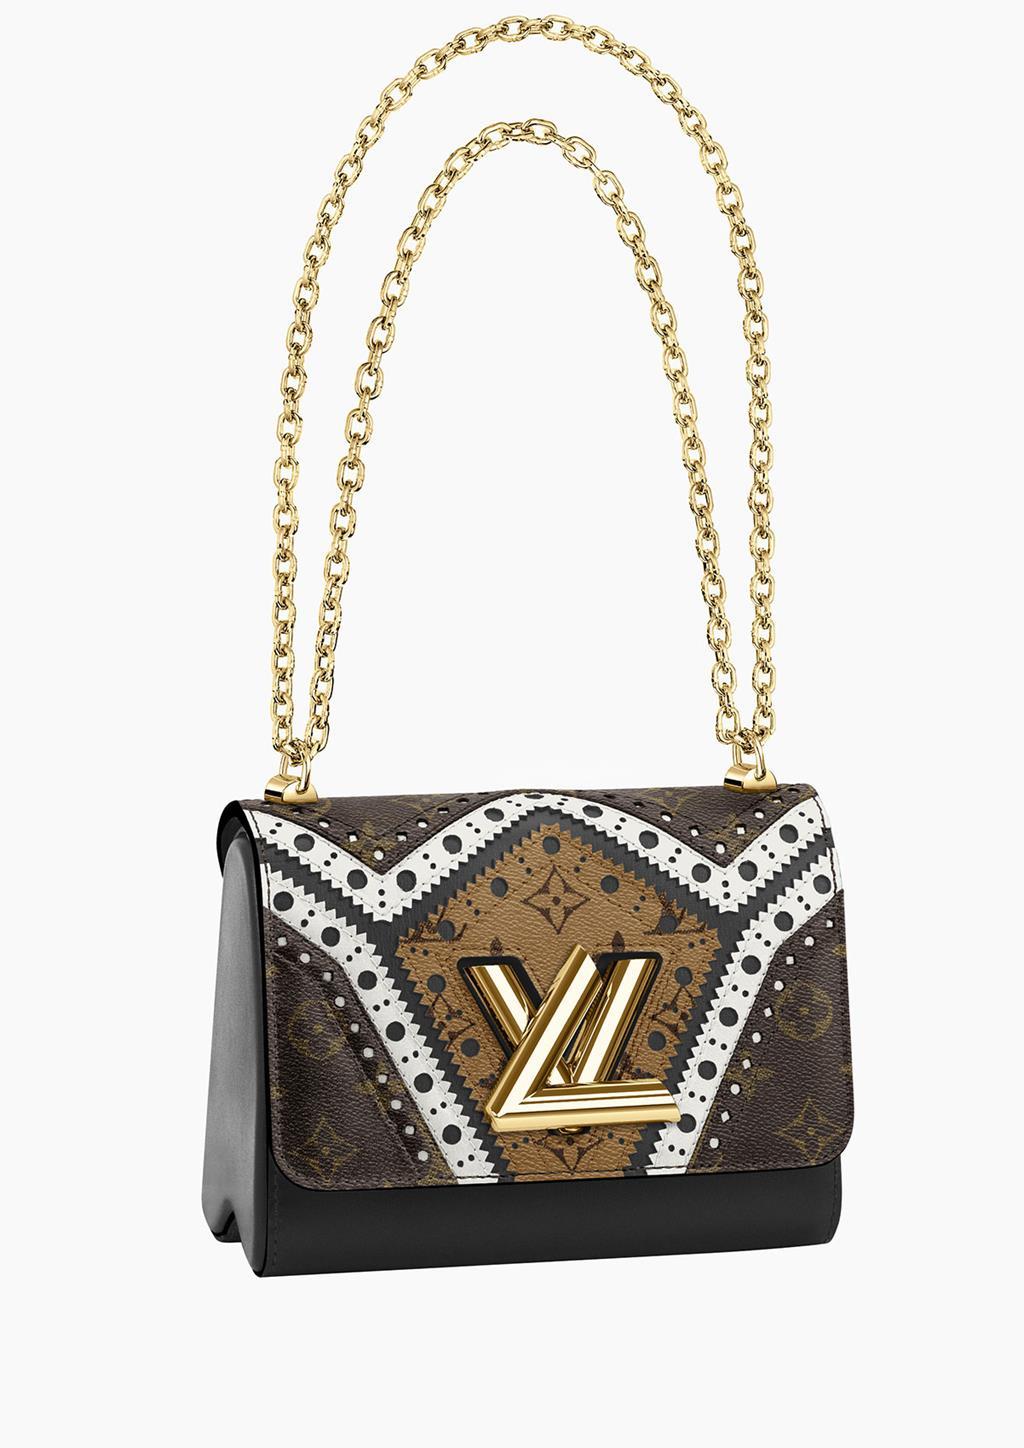 Louis Vuitton Twist Mini Bag Epi Leather M56119